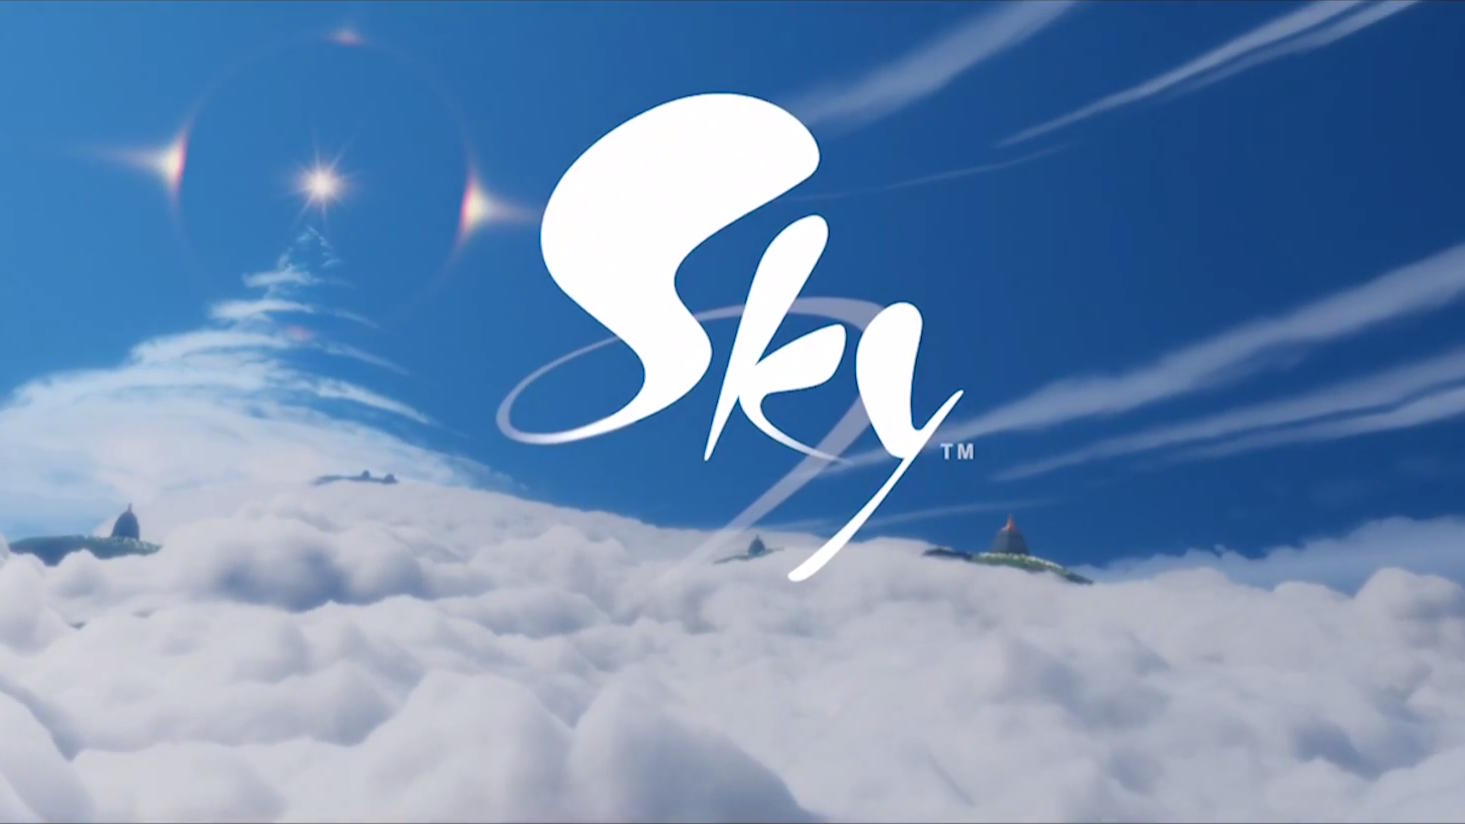 Apple Event 2017 – thatgamecompany Reveals Airborne Adventure ‘Sky’